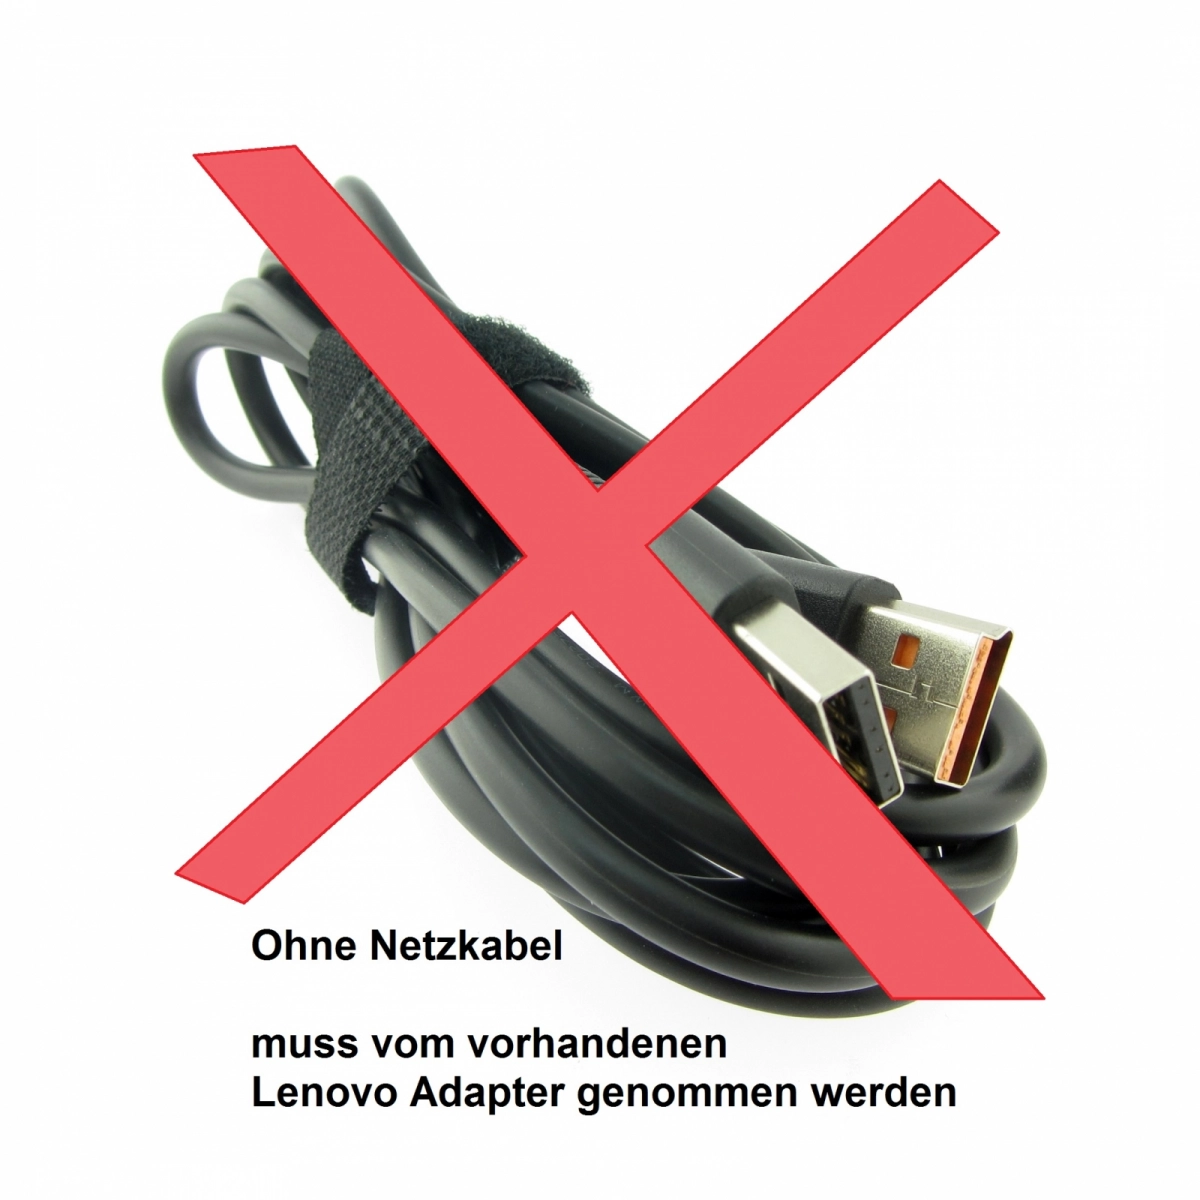 Original Netzteil für LENOVO ADL40WDB, 20V, 2A, Stecker USB, ohne USB-Kabel